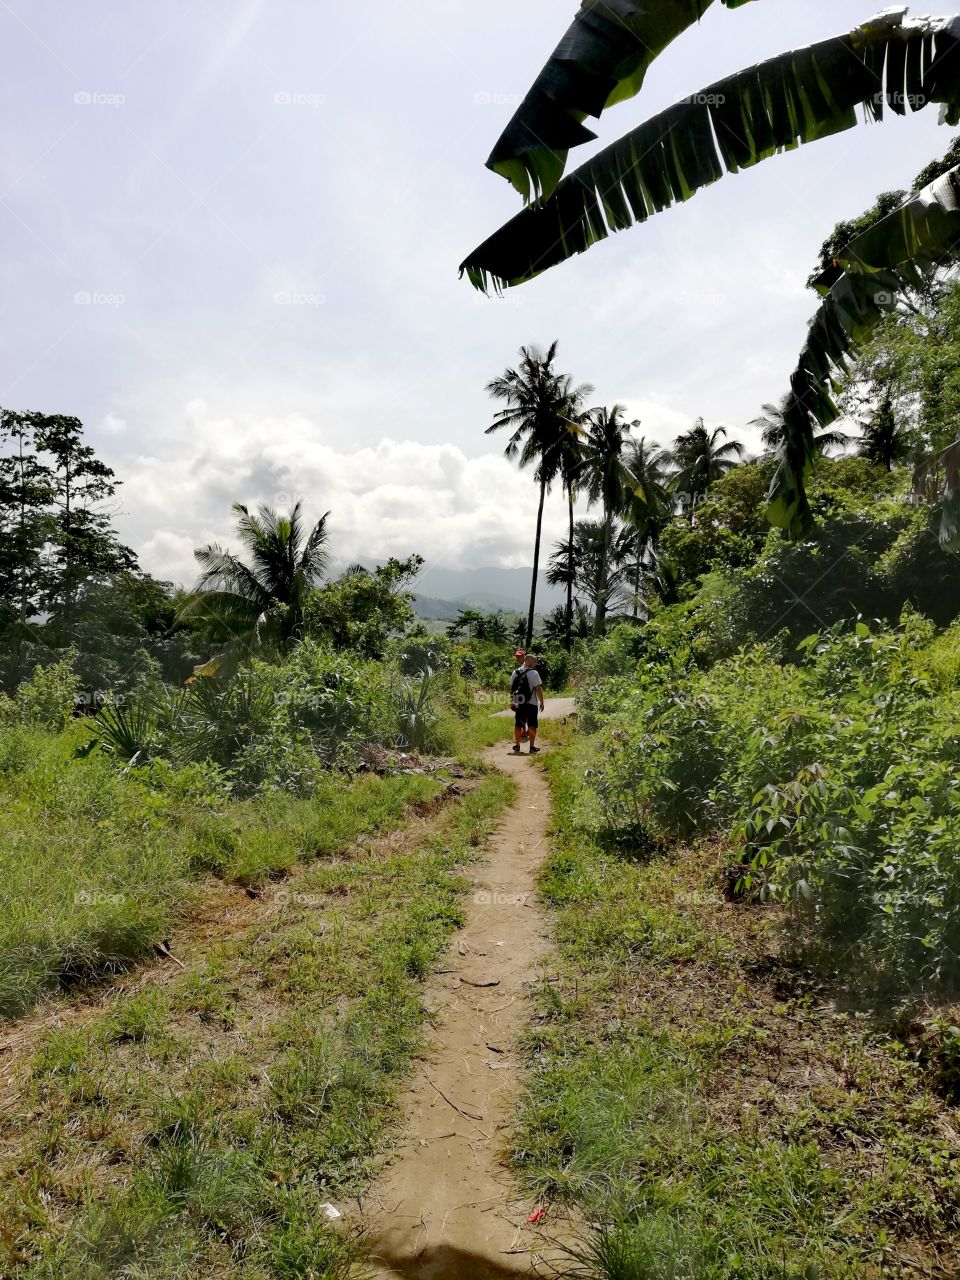 Narrow path leading through tropical exotic landscape on island of Mindoro, Philippines